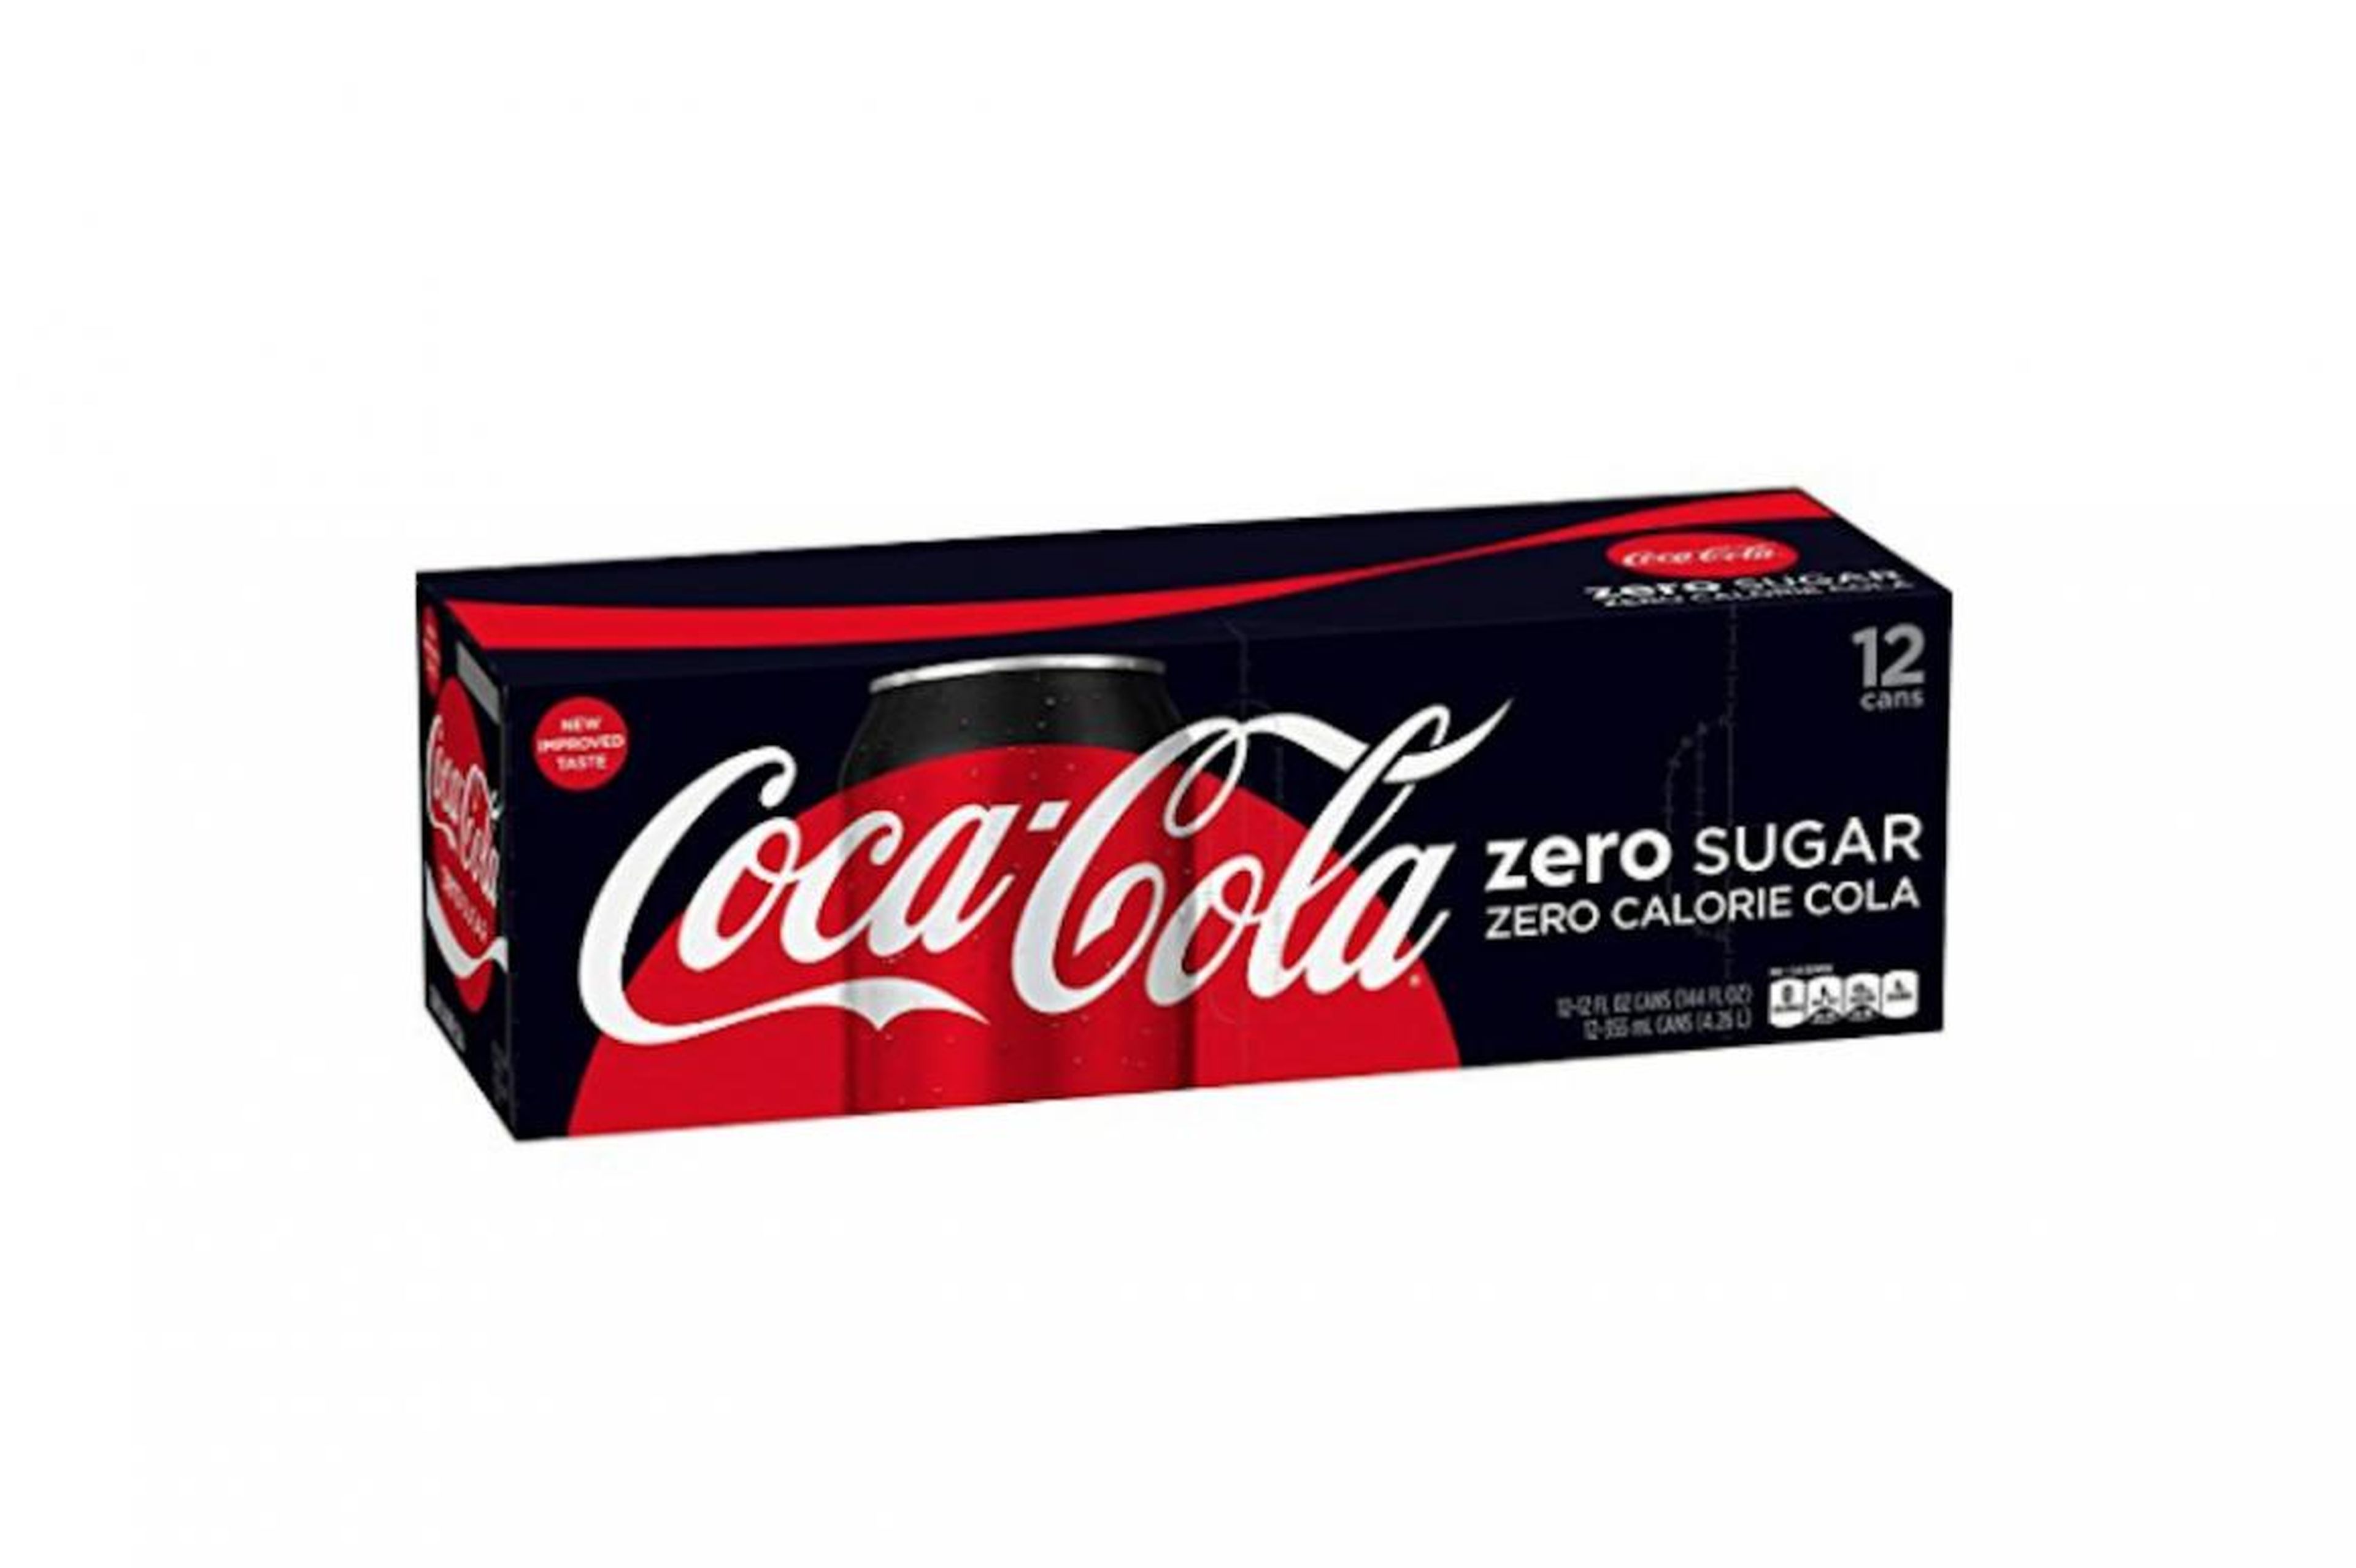 Singapore: In Singapore, <a href="https://amzn.to/2LgJ1ZT">Coca-Cola Zero Sugar</a> was a top seller.